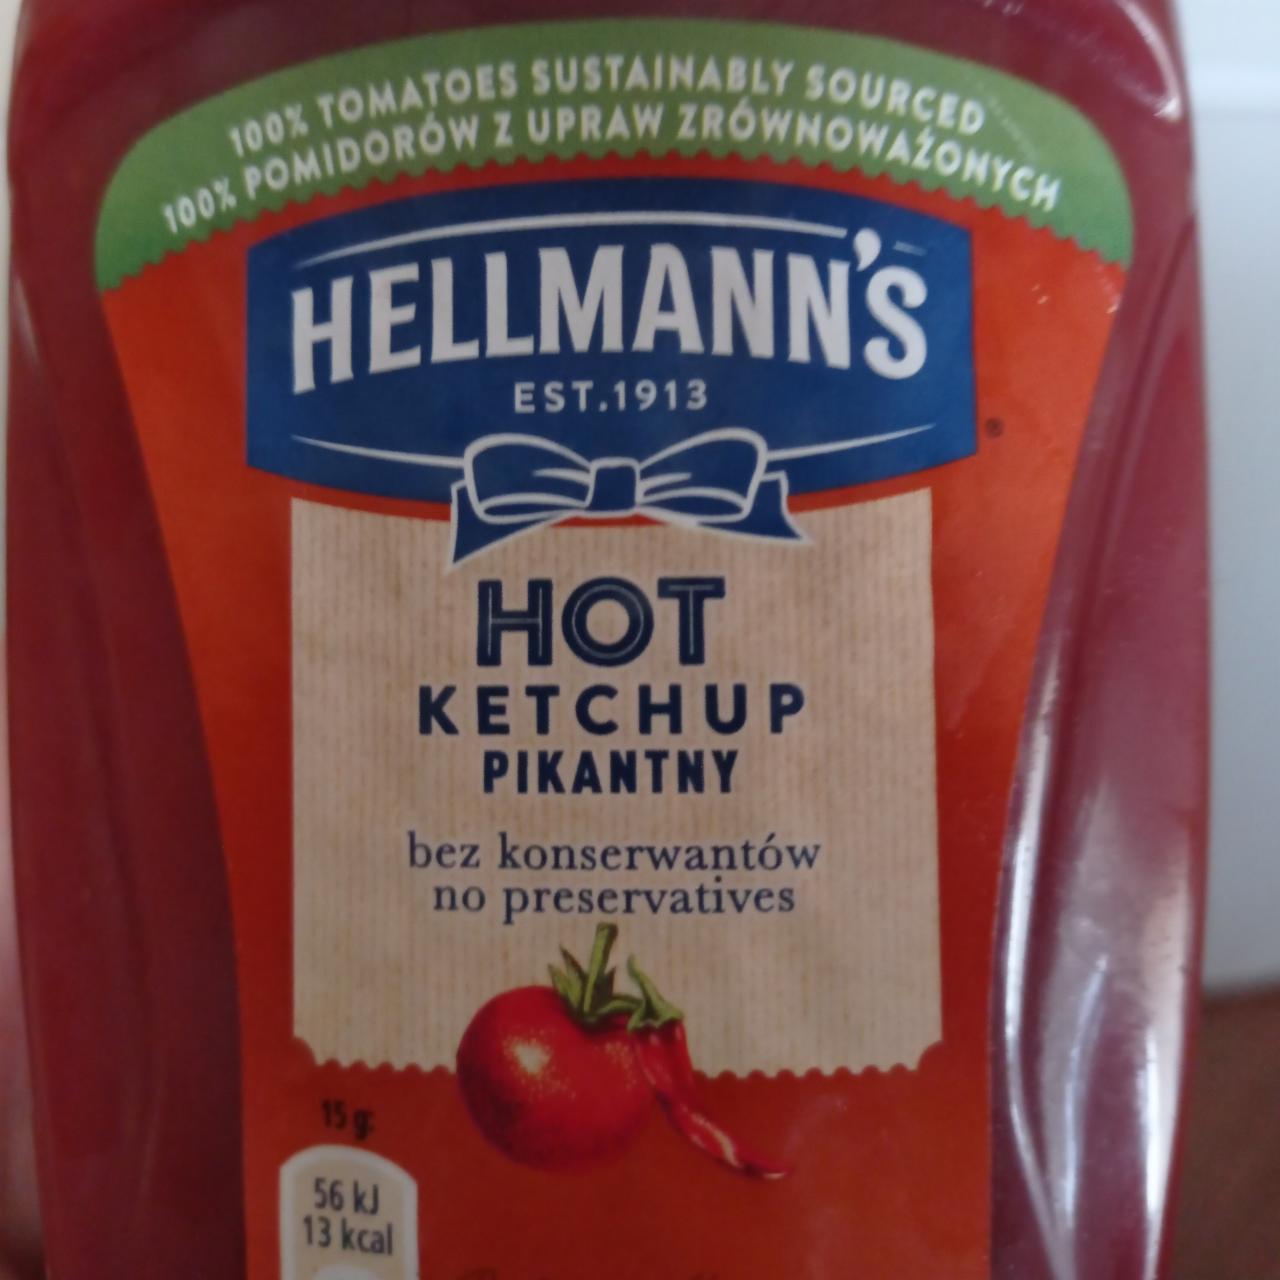 Zdjęcia - Hot ketchup pikantny Hellman's